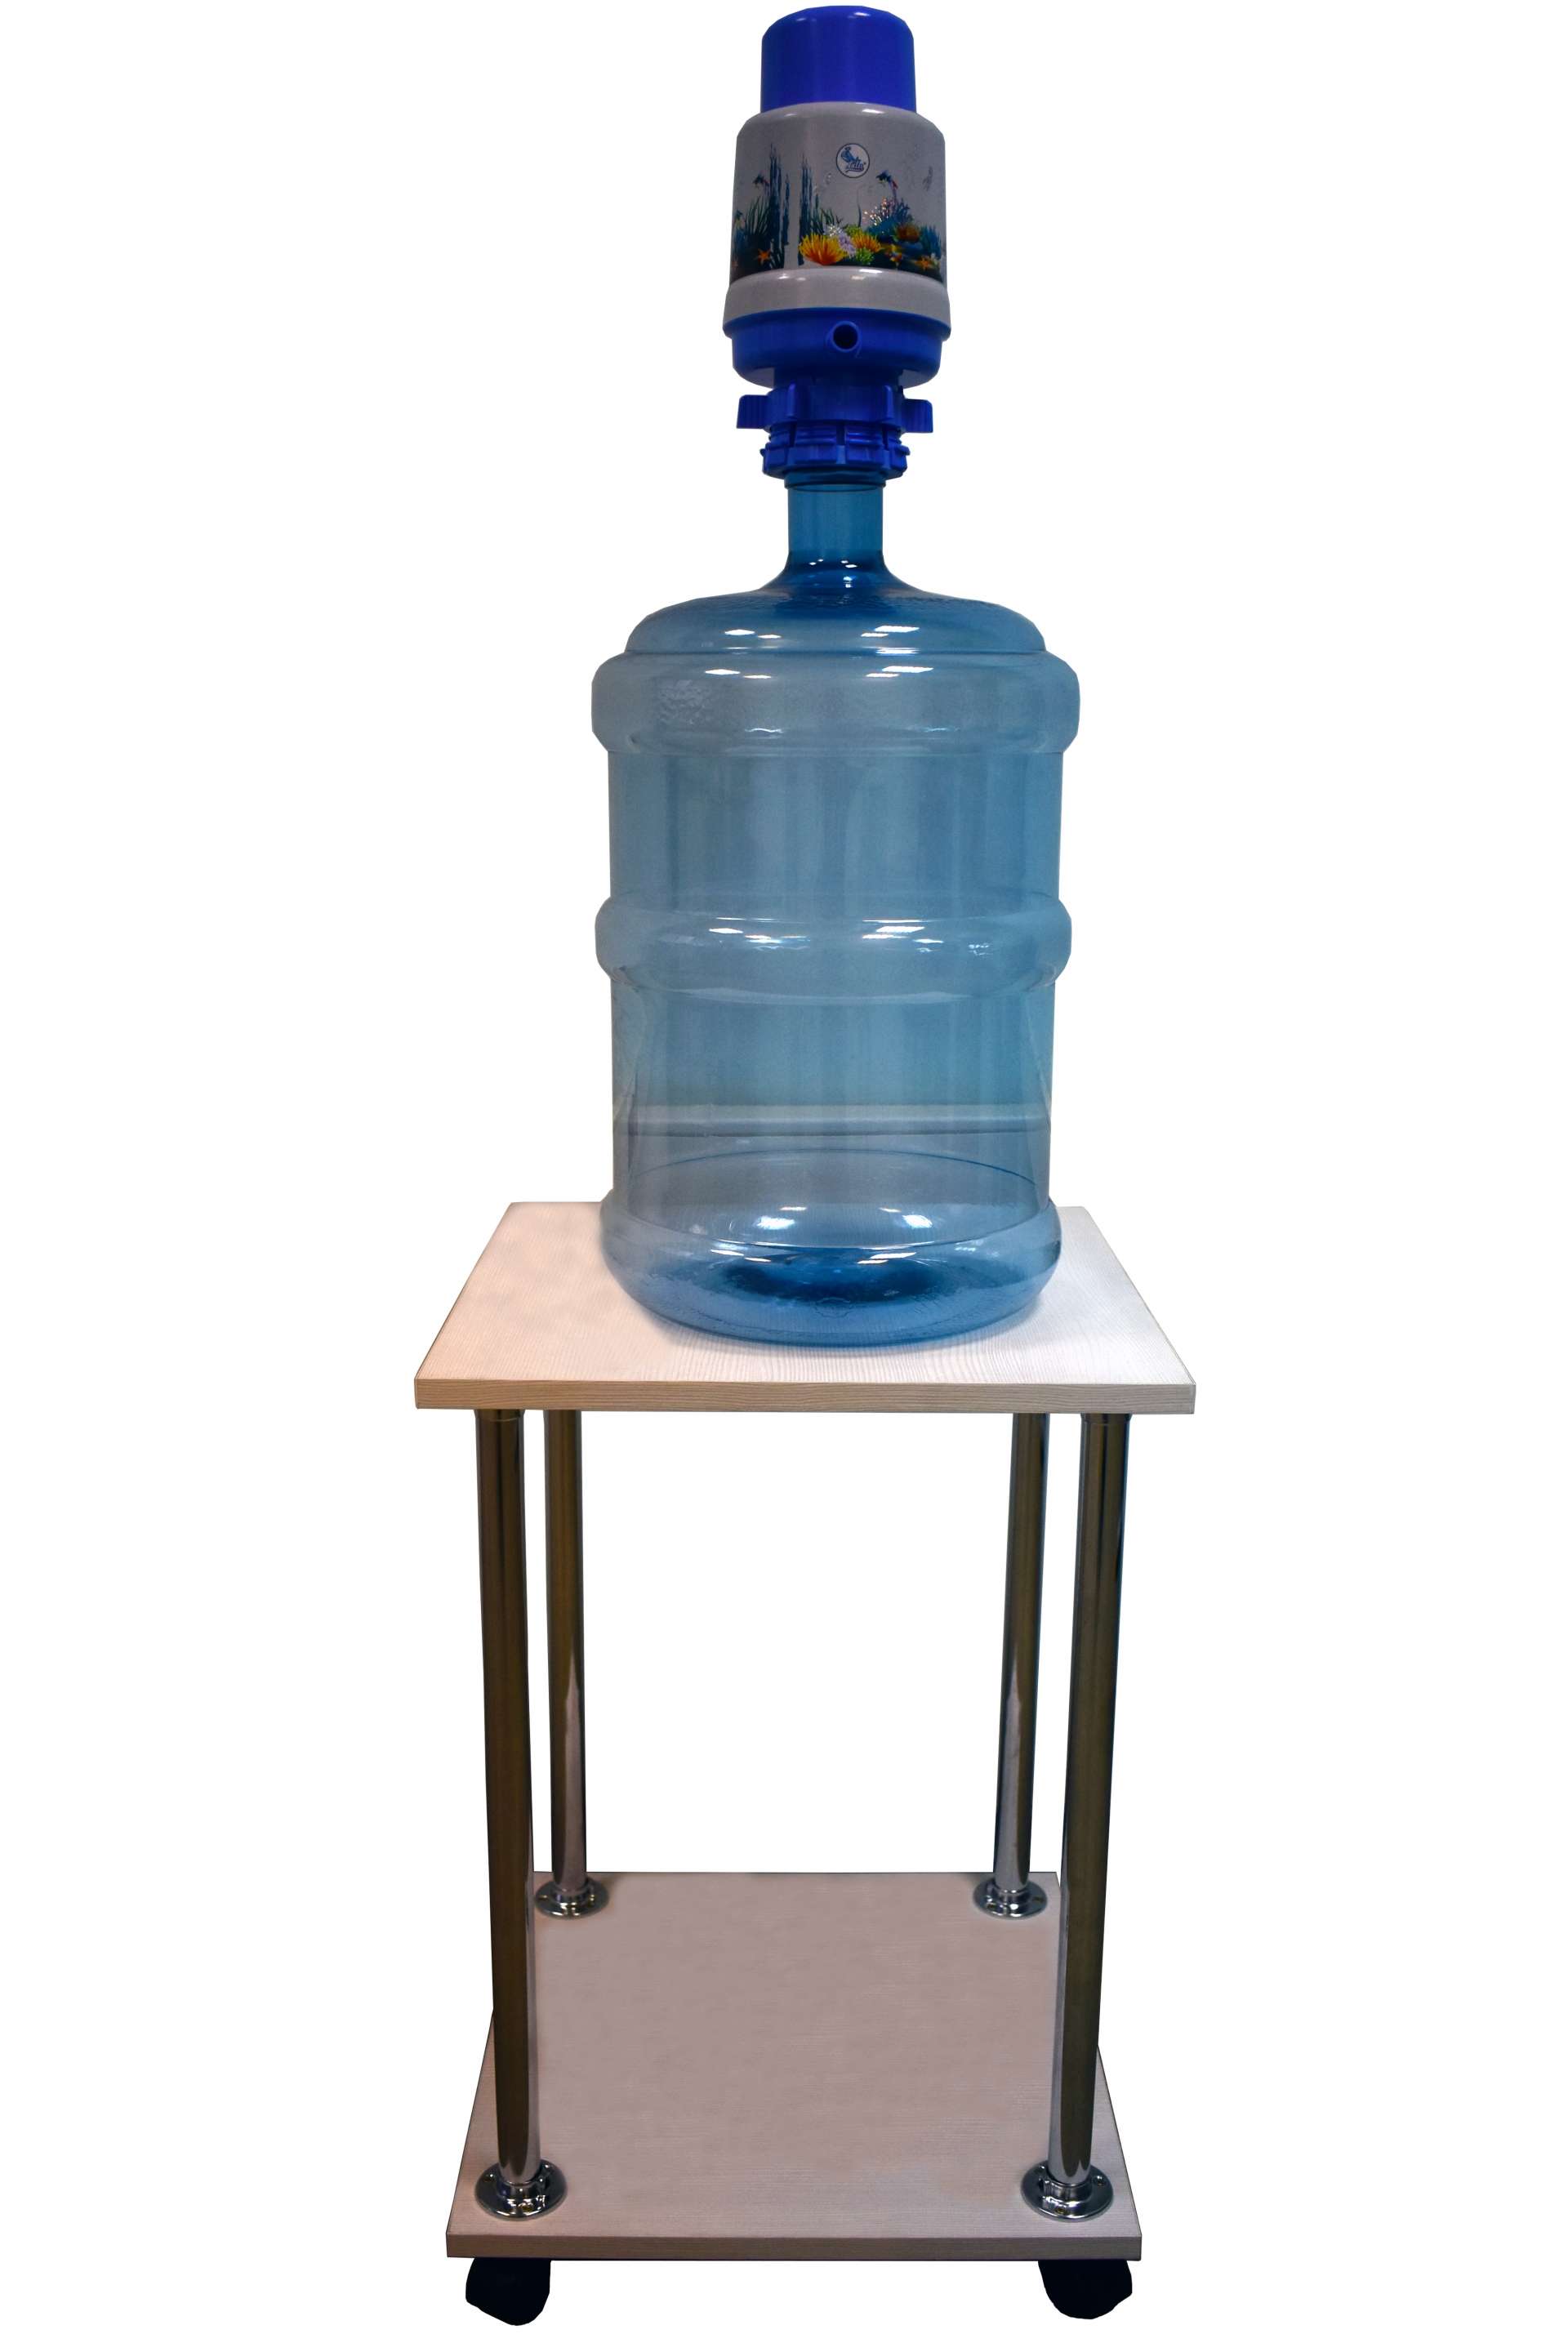 Бутылка из под кулера. Подставка под кулер для воды. Тумба под бутыль воды. Тумбочка под кулер с водой. Подставка под бутыль с водой.